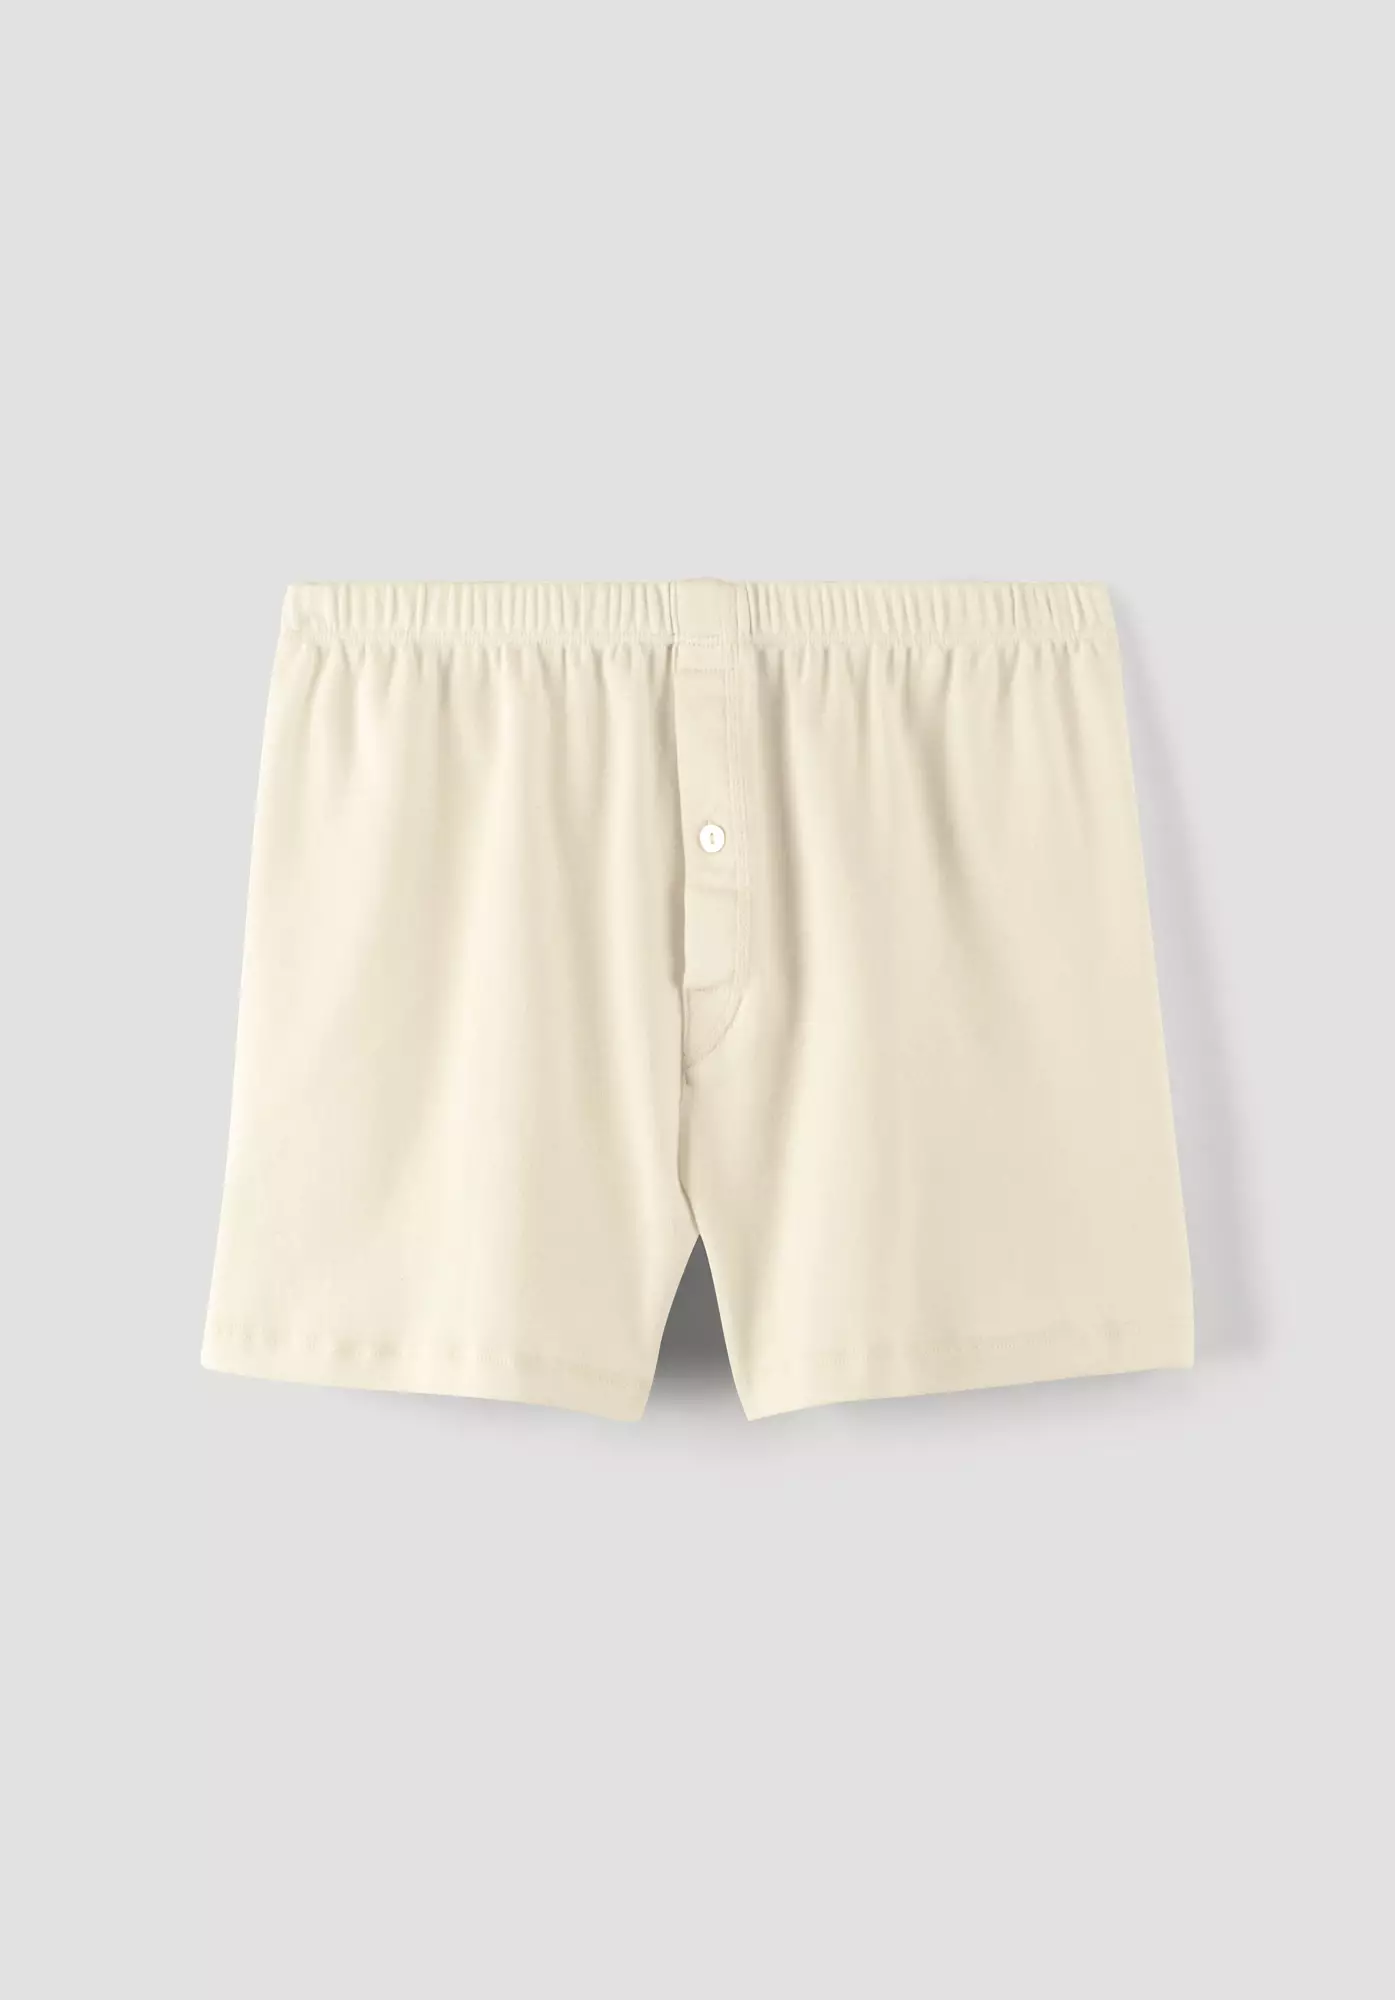 Boxer shorts regular cut PURE NATURE made of pure organic cotton - 2